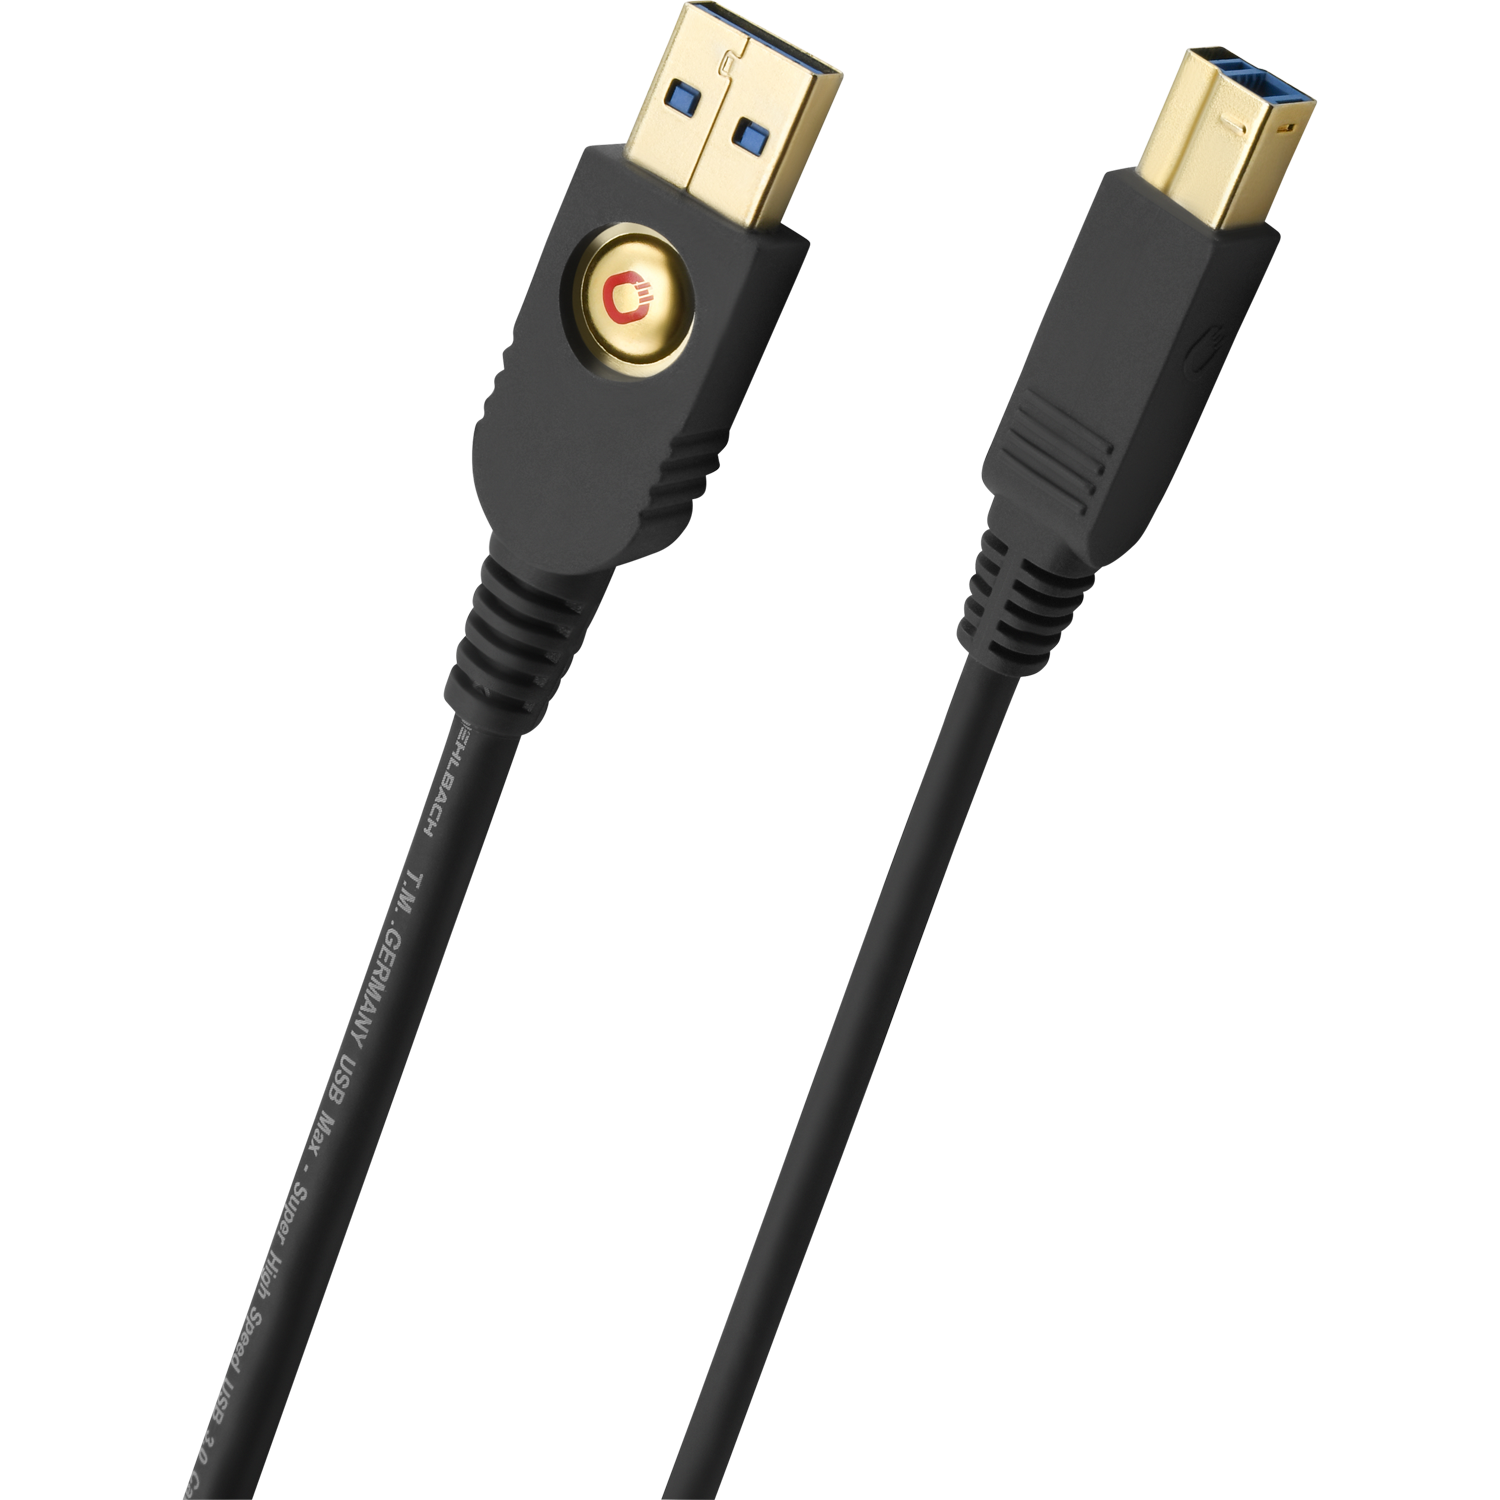 Gen B Max OEHLBACH 3.2 USB-Kabel 1 A Typ A/B auf Typ Kabel